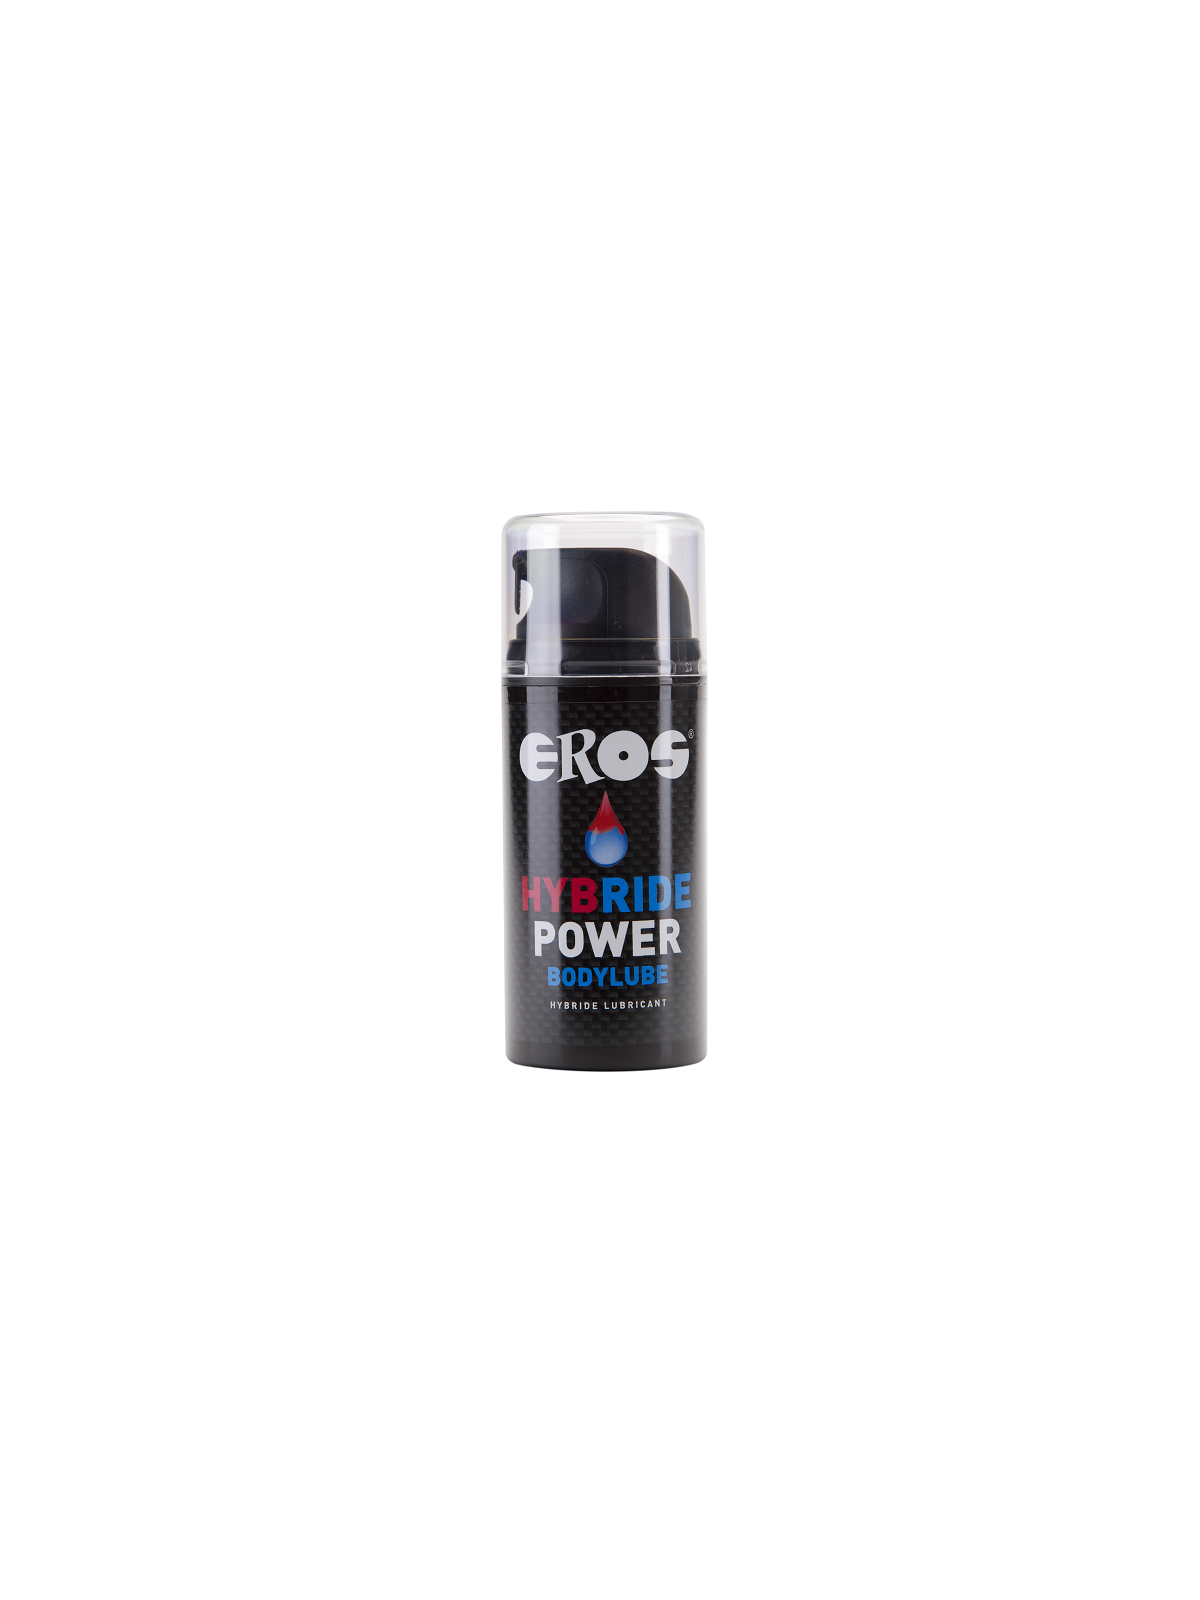 Eros Hybride Power Bodylube - Comprar Lubricante híbrido Eros - Lubricantes base agua (1)